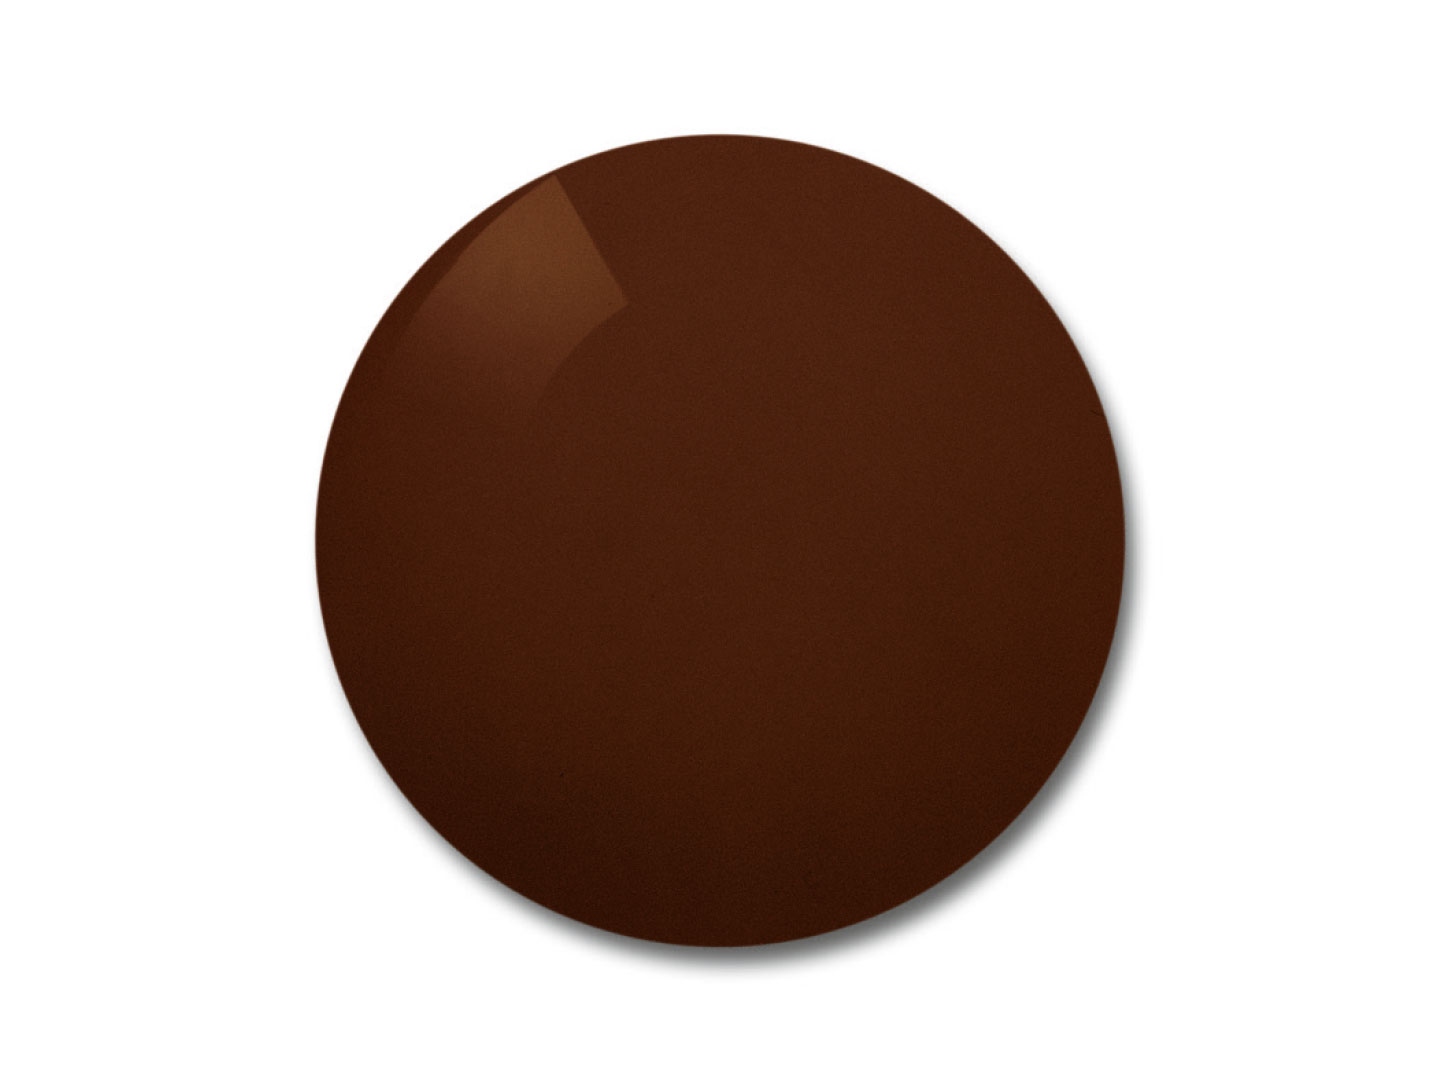 Illustration of ZEISS Skylet Sport Lens with dark brown tint 